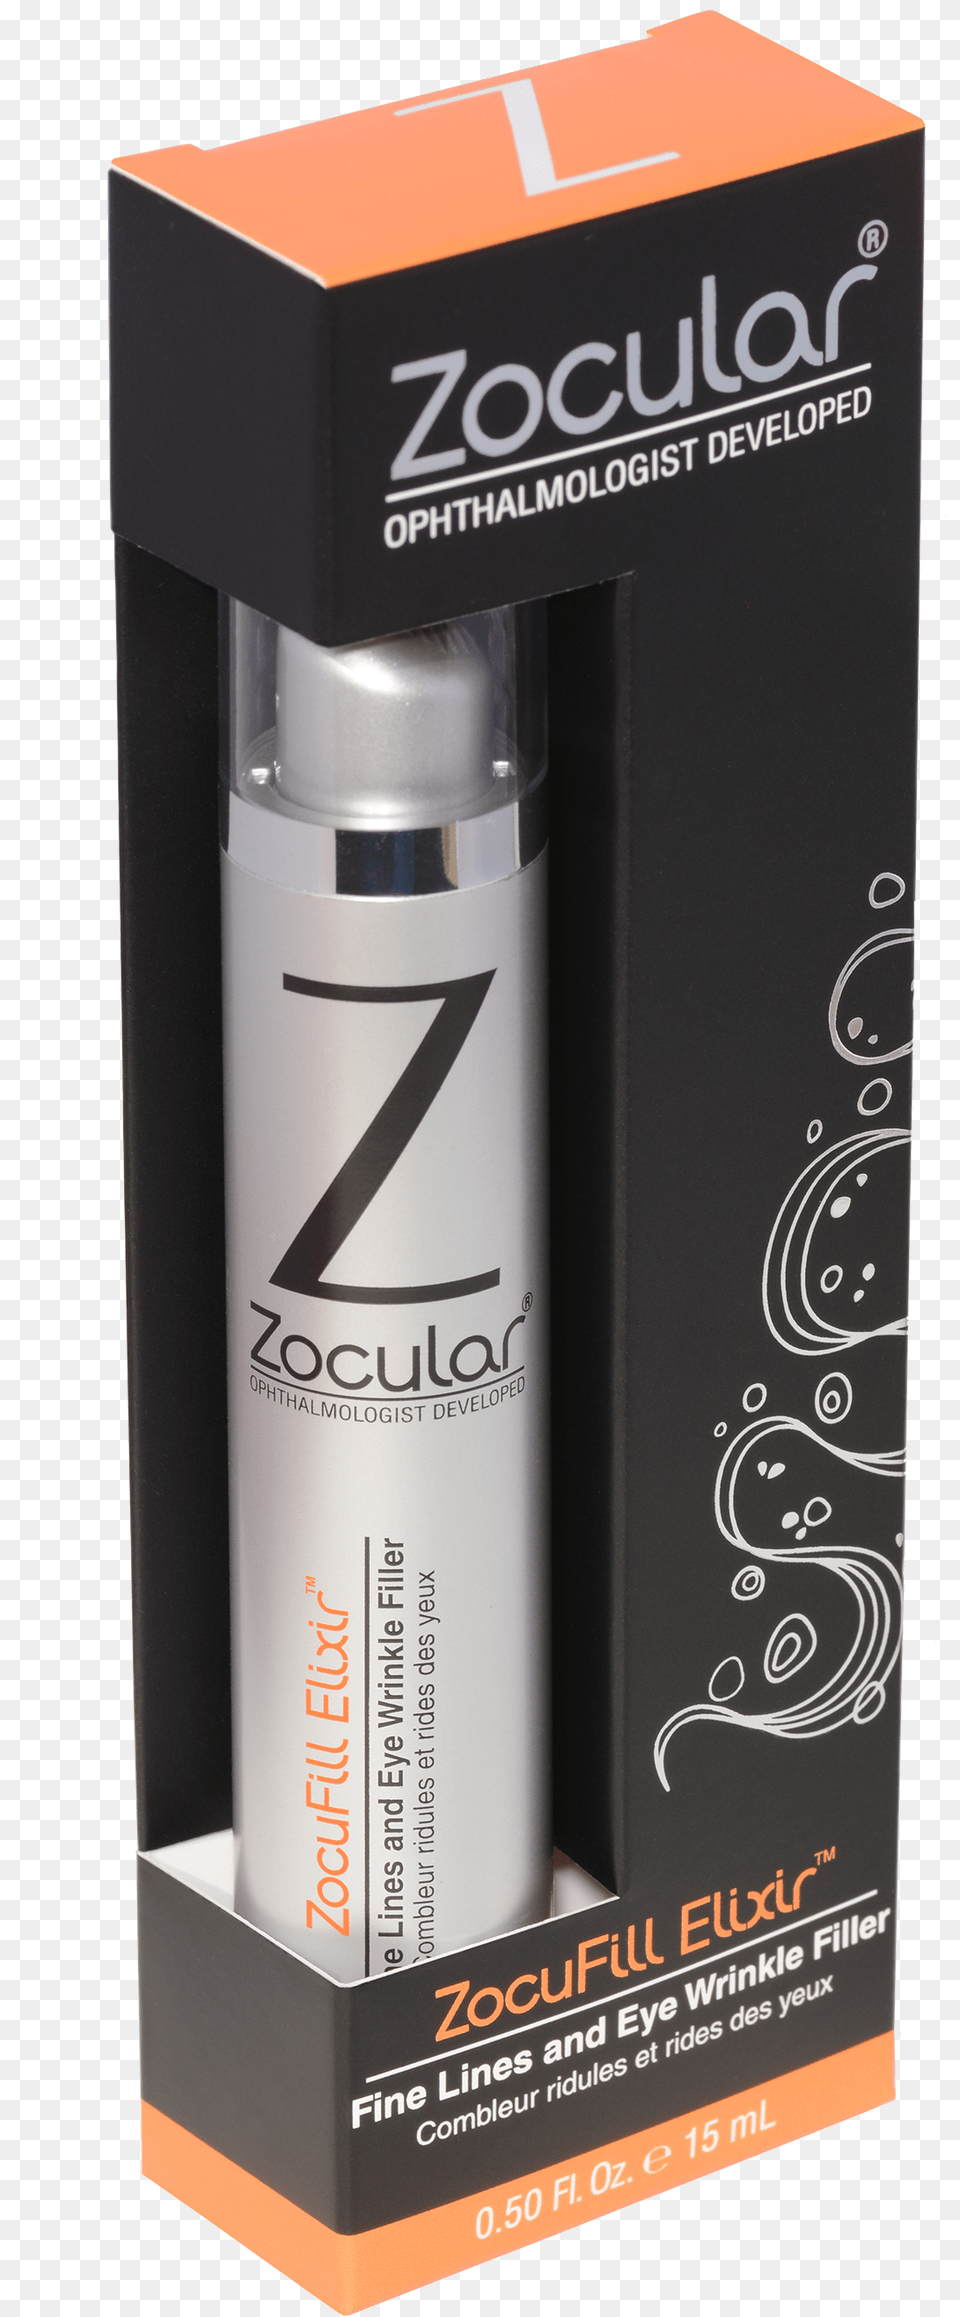 Zocufill Elixir For Wrinkles Eye Liner, Bottle, Cosmetics Free Png